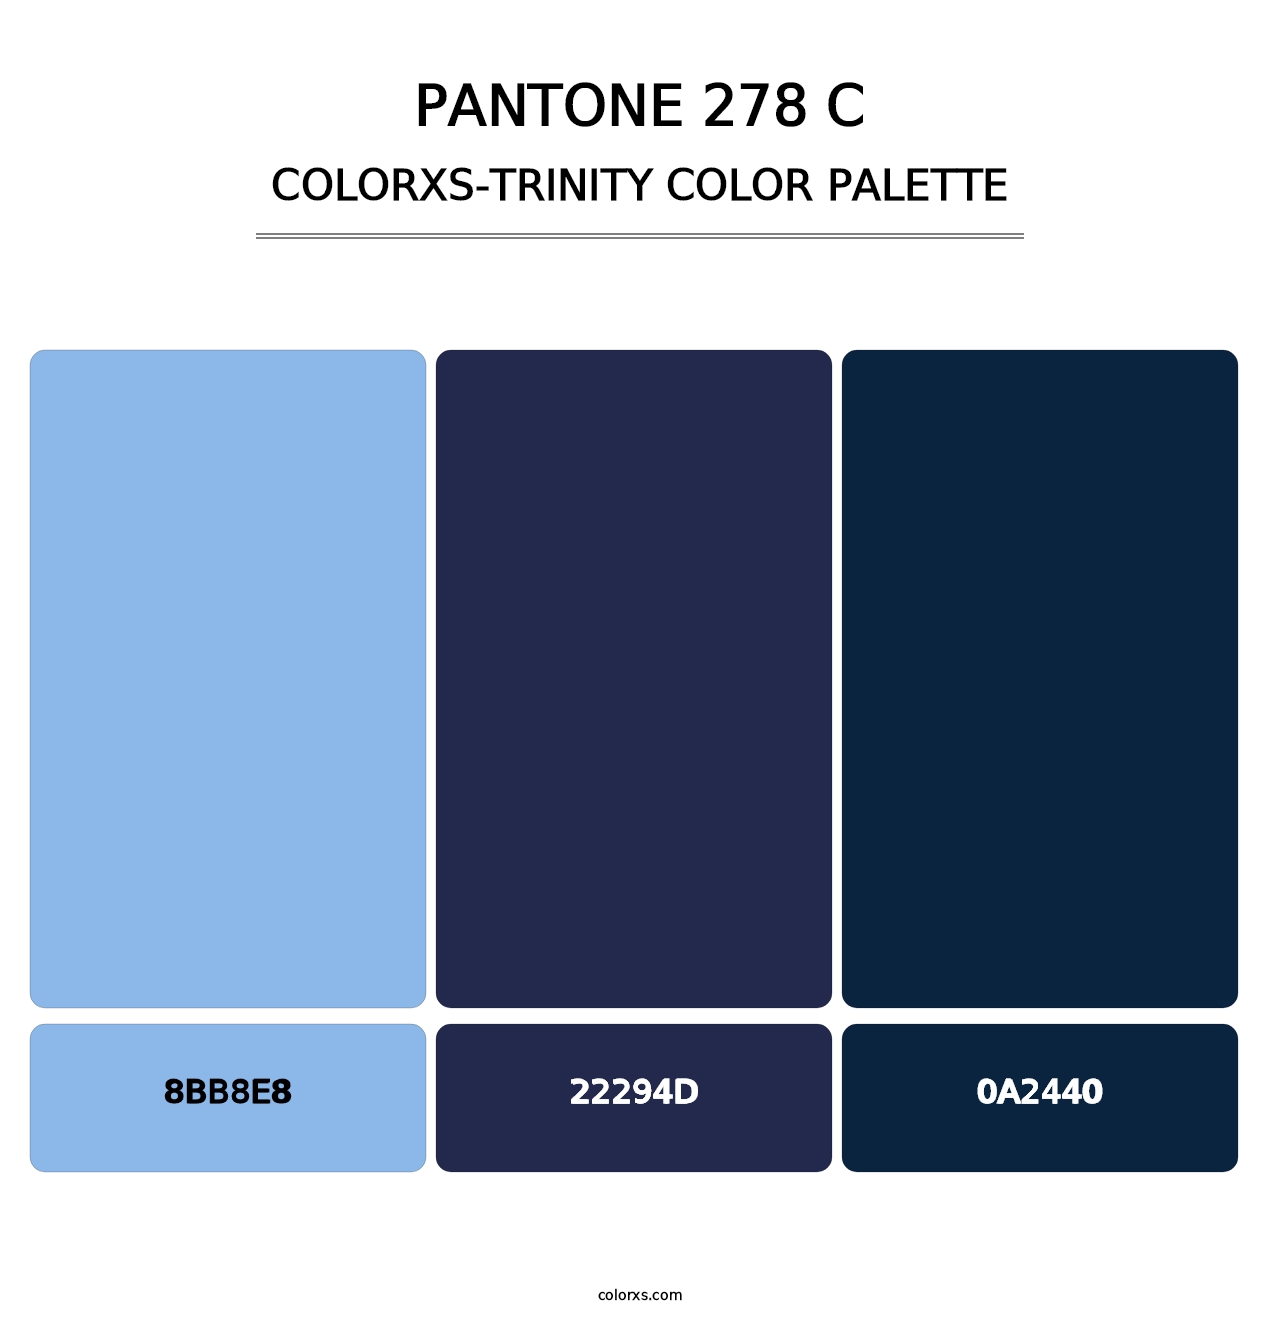 PANTONE 278 C - Colorxs Trinity Palette